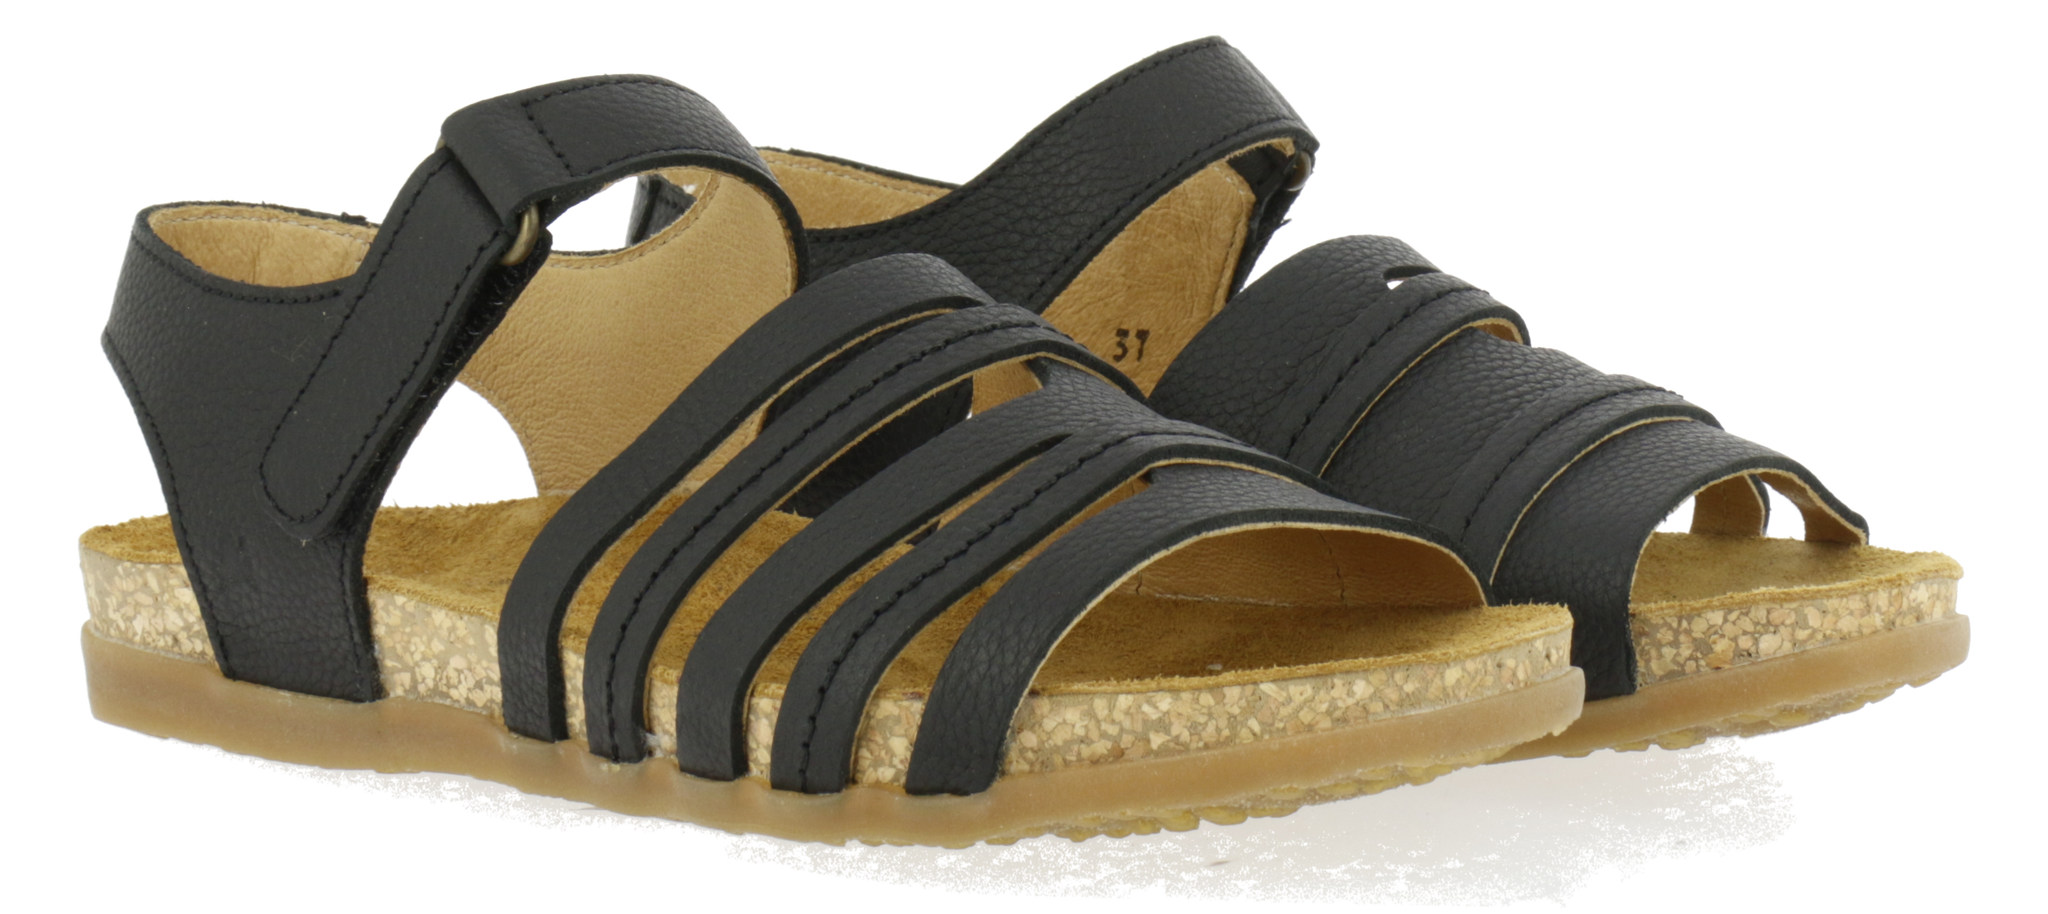 El Naturalista Zumaia Multi Leather N5247 Sandals